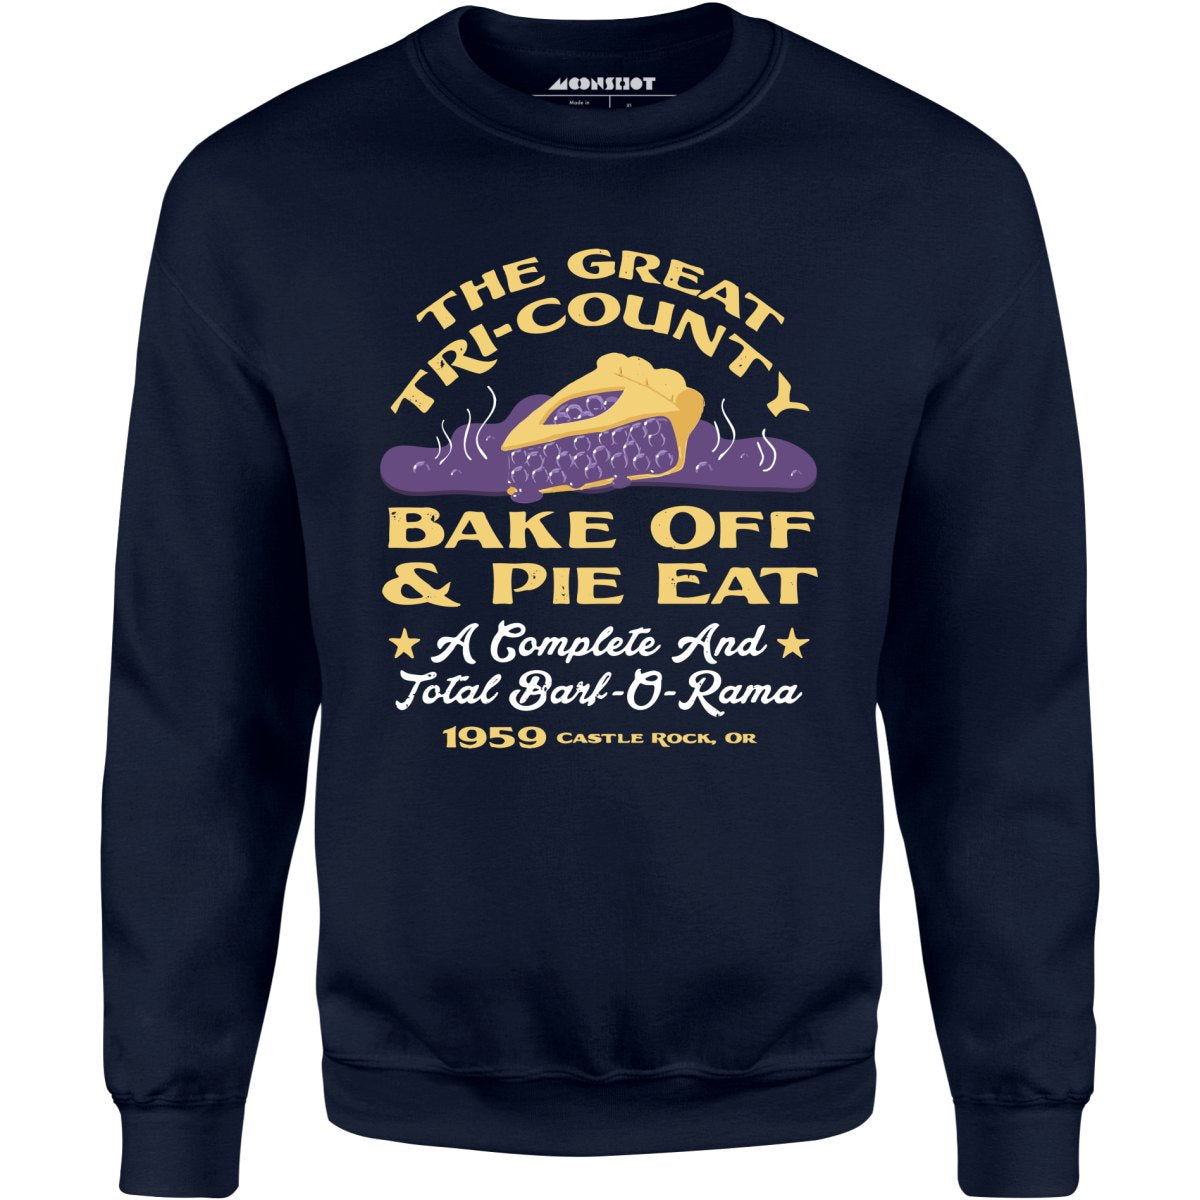 The Great Tri-County Bake Off & Pie Eat - Unisex Sweatshirt